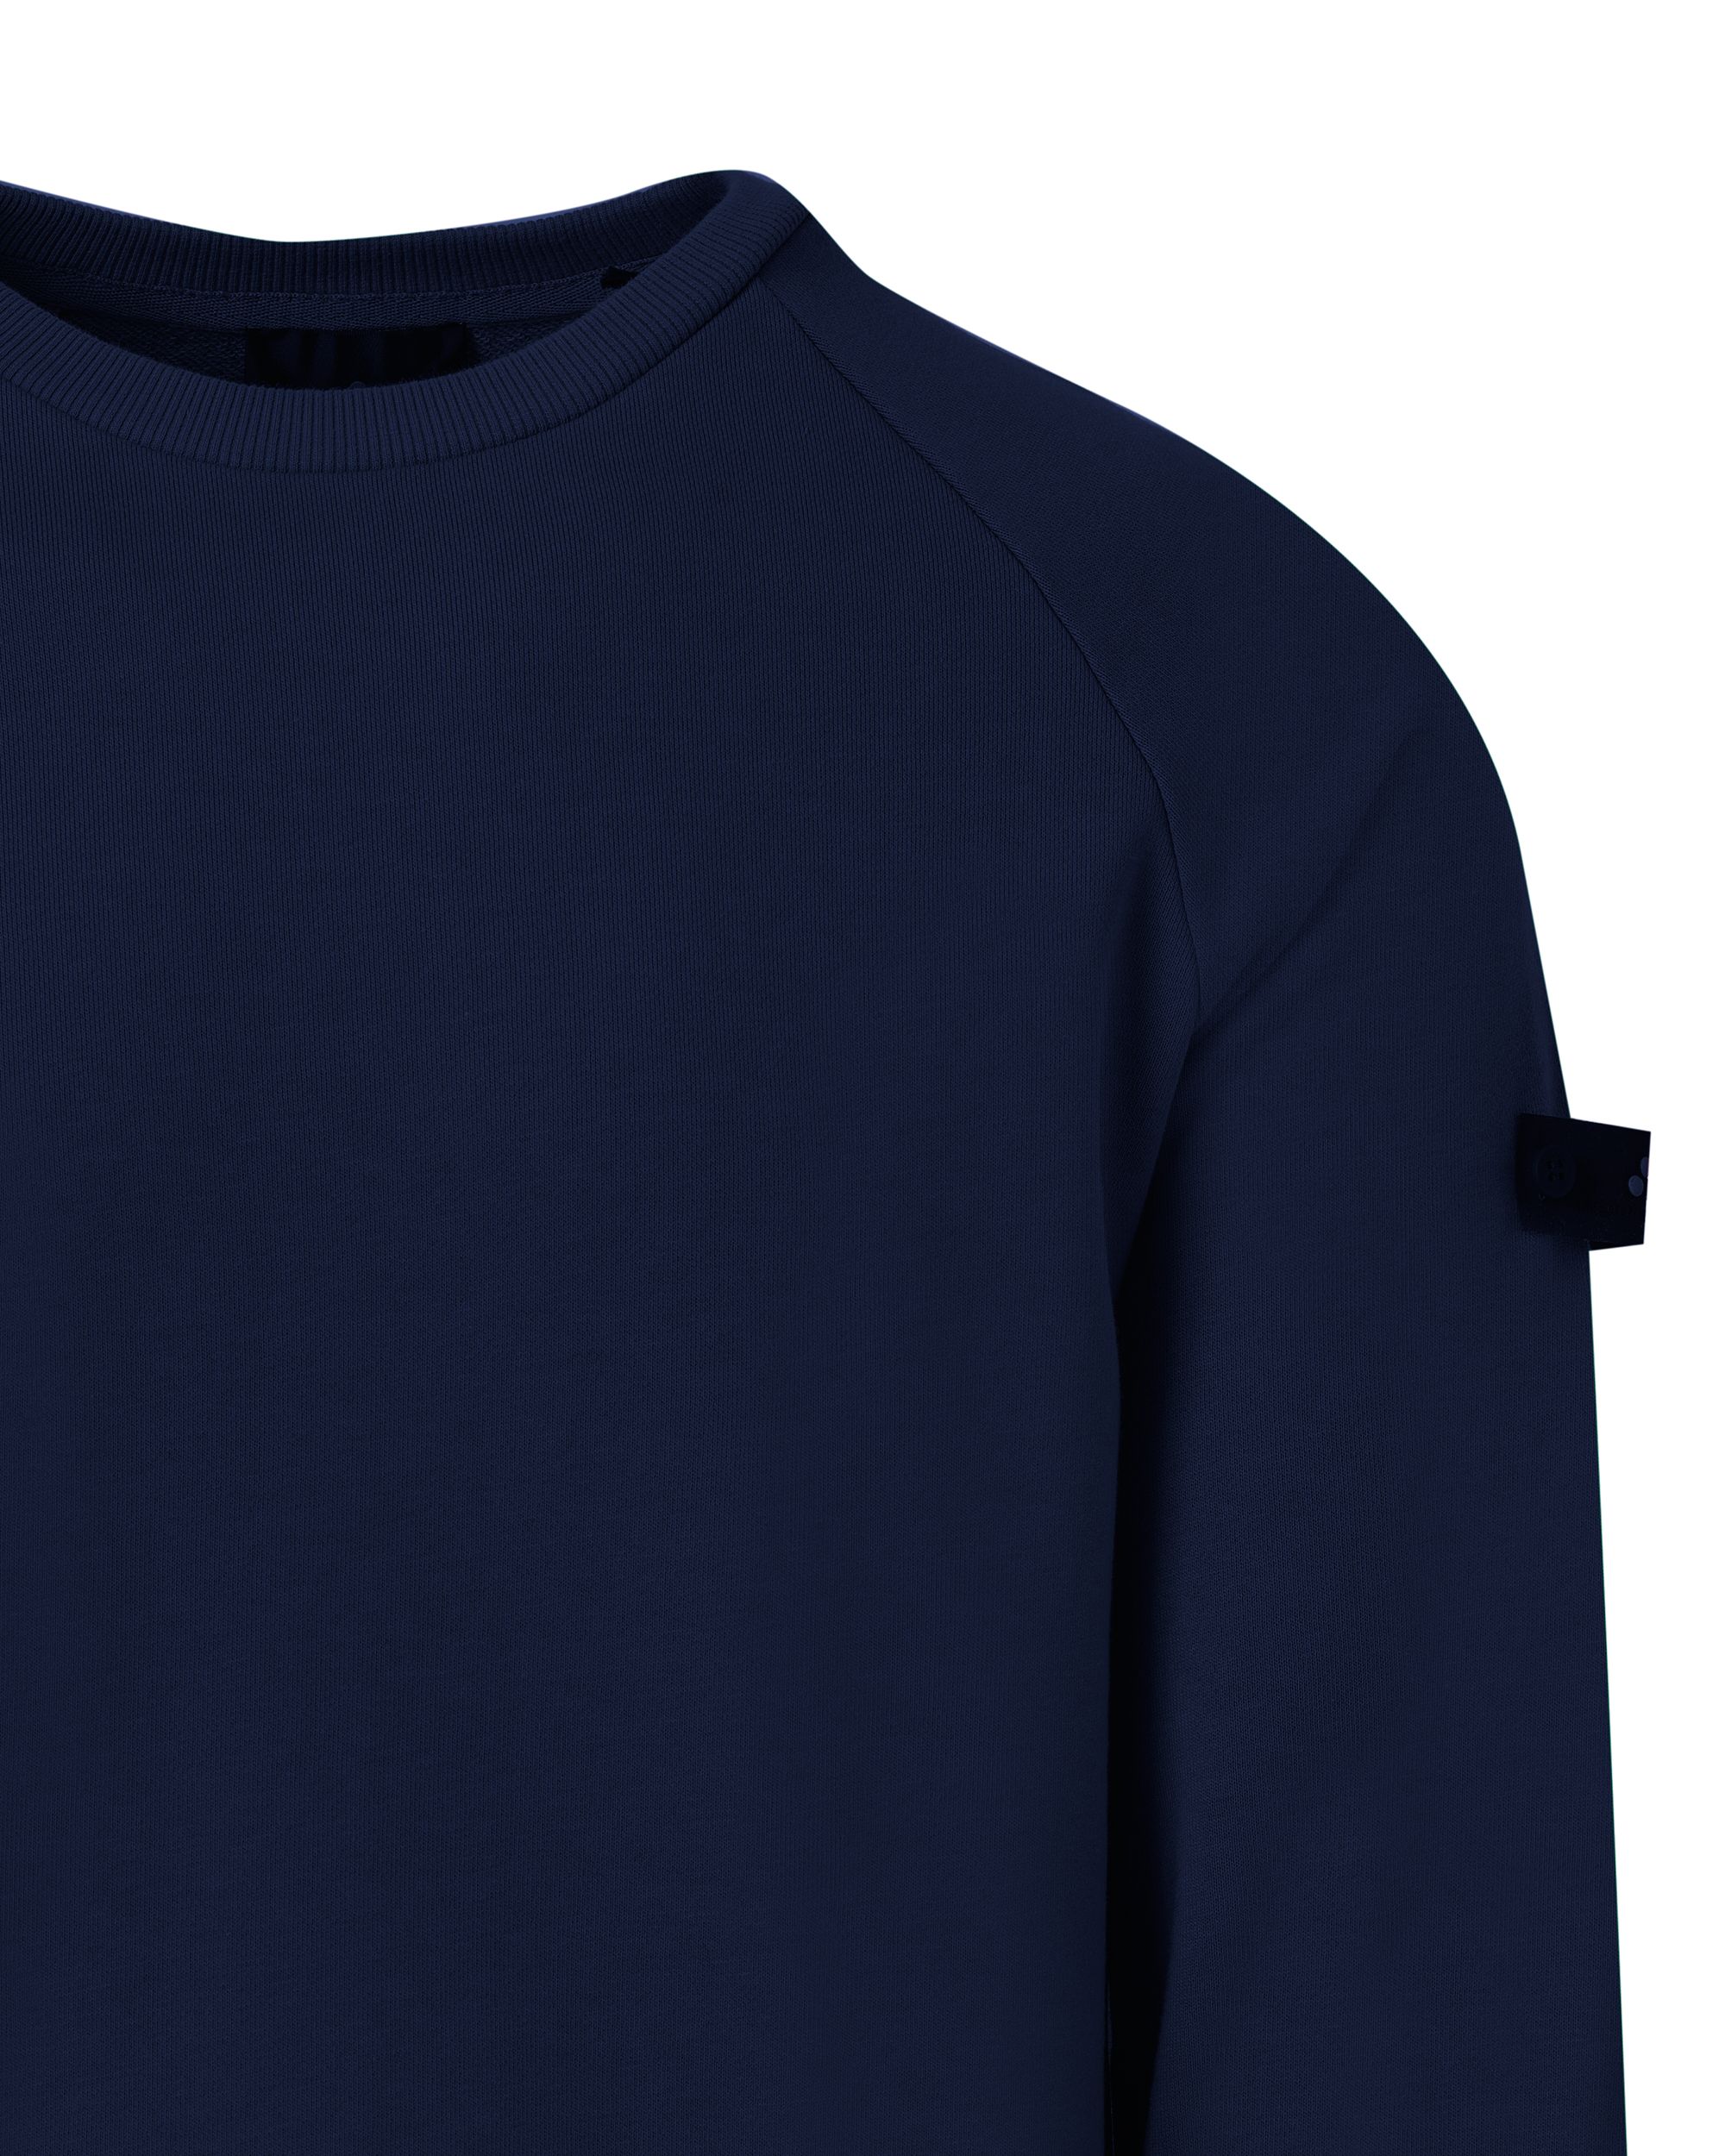 Peuterey Sweater Donker blauw 083953-001-L